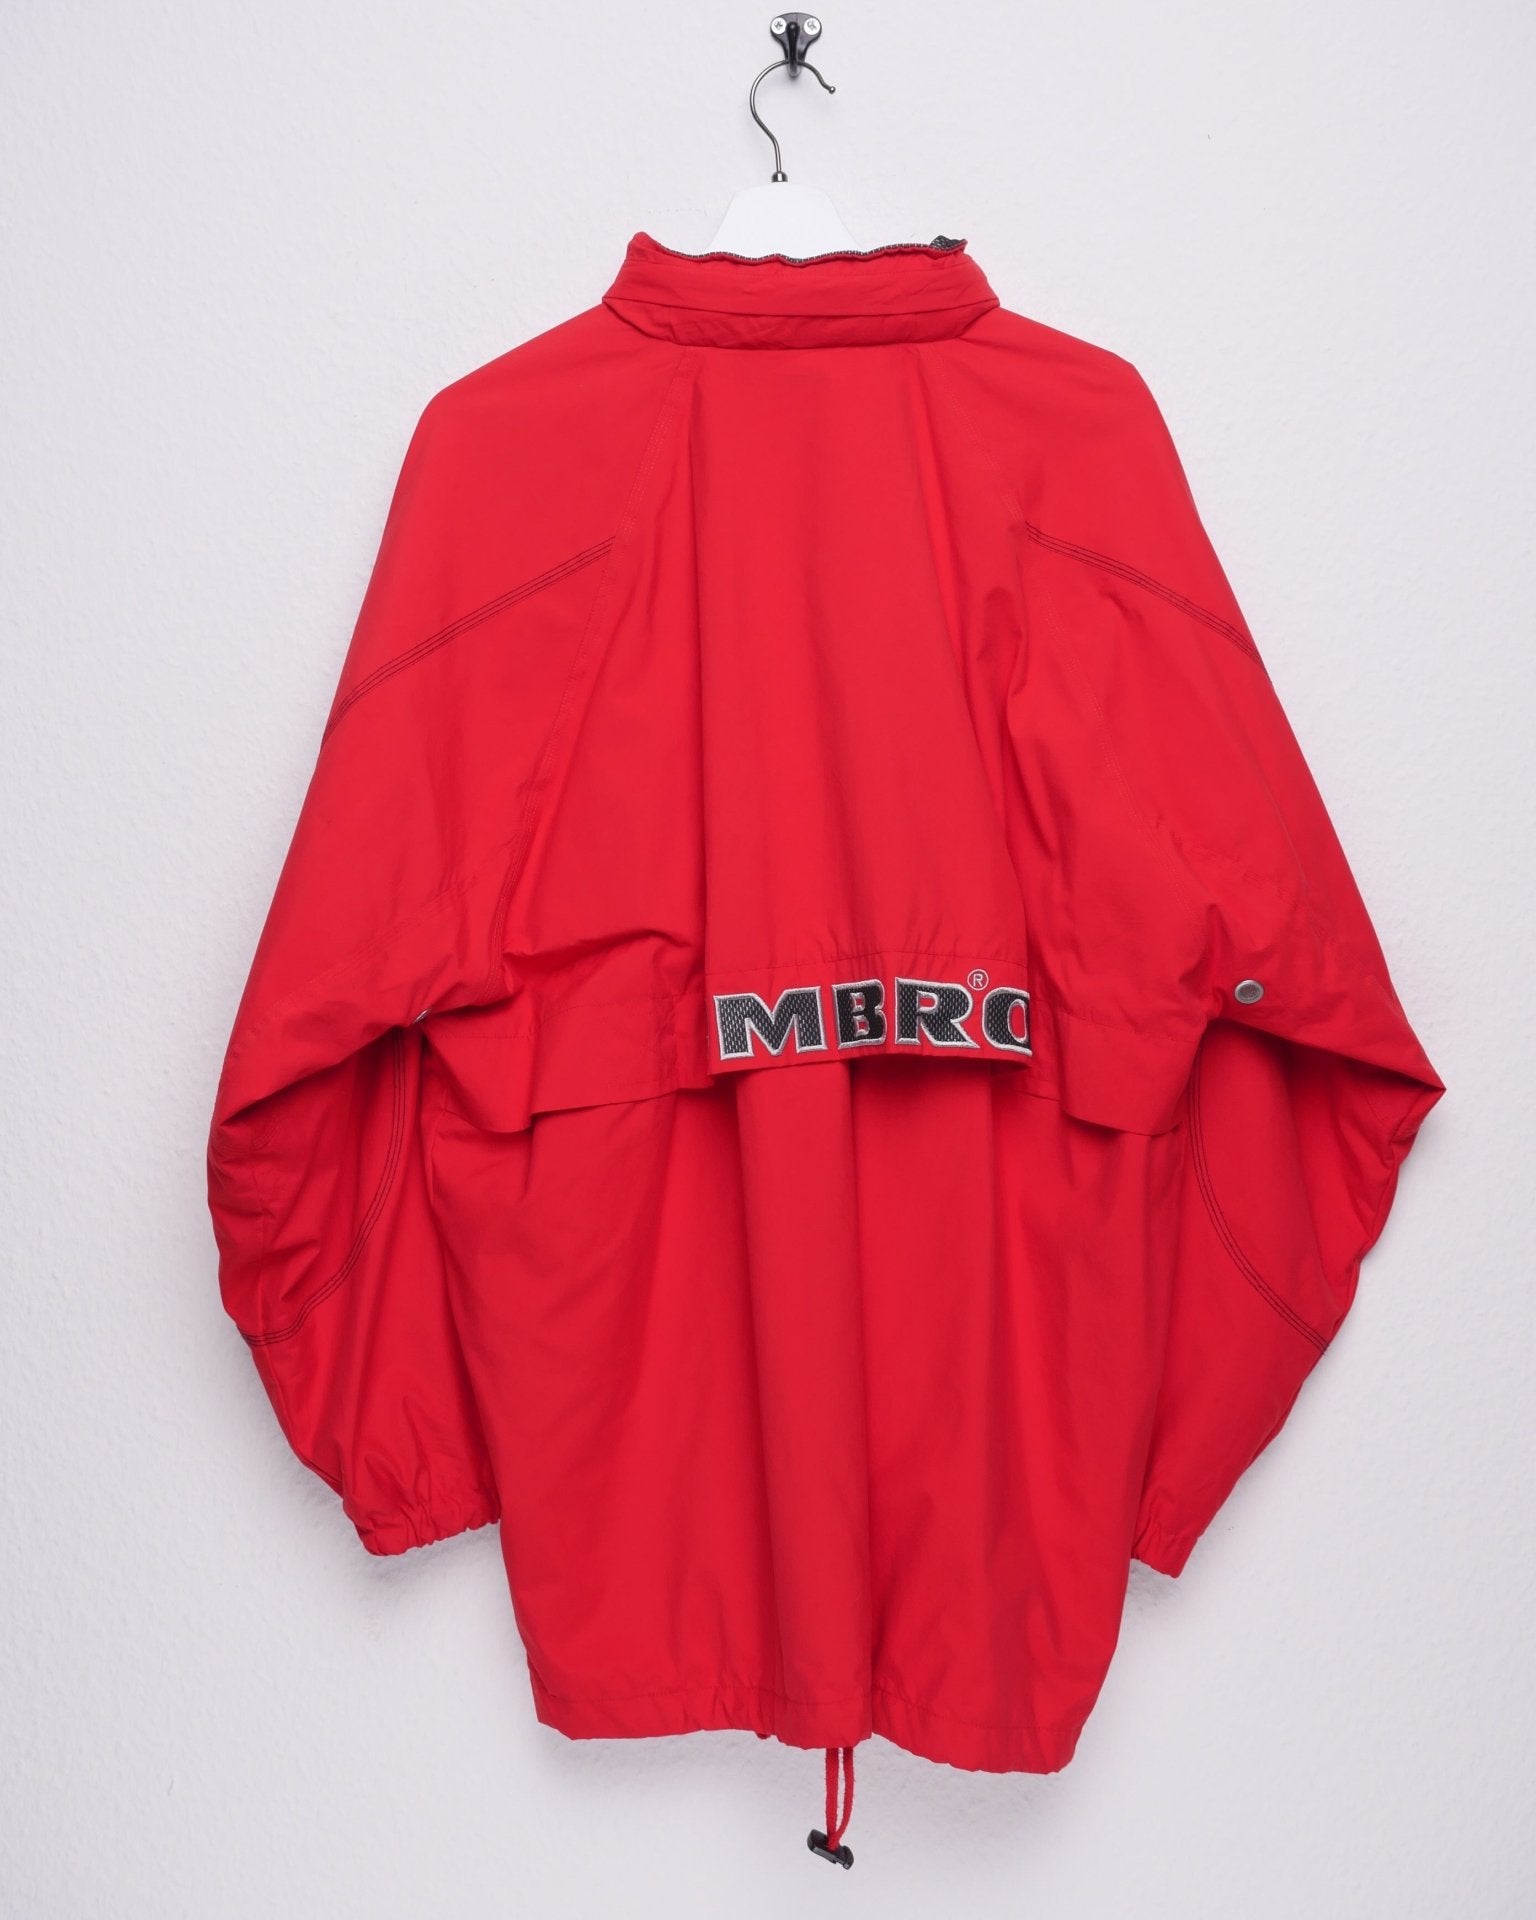 Umbro embroidered Logo red Vintage Track Jacket - Peeces